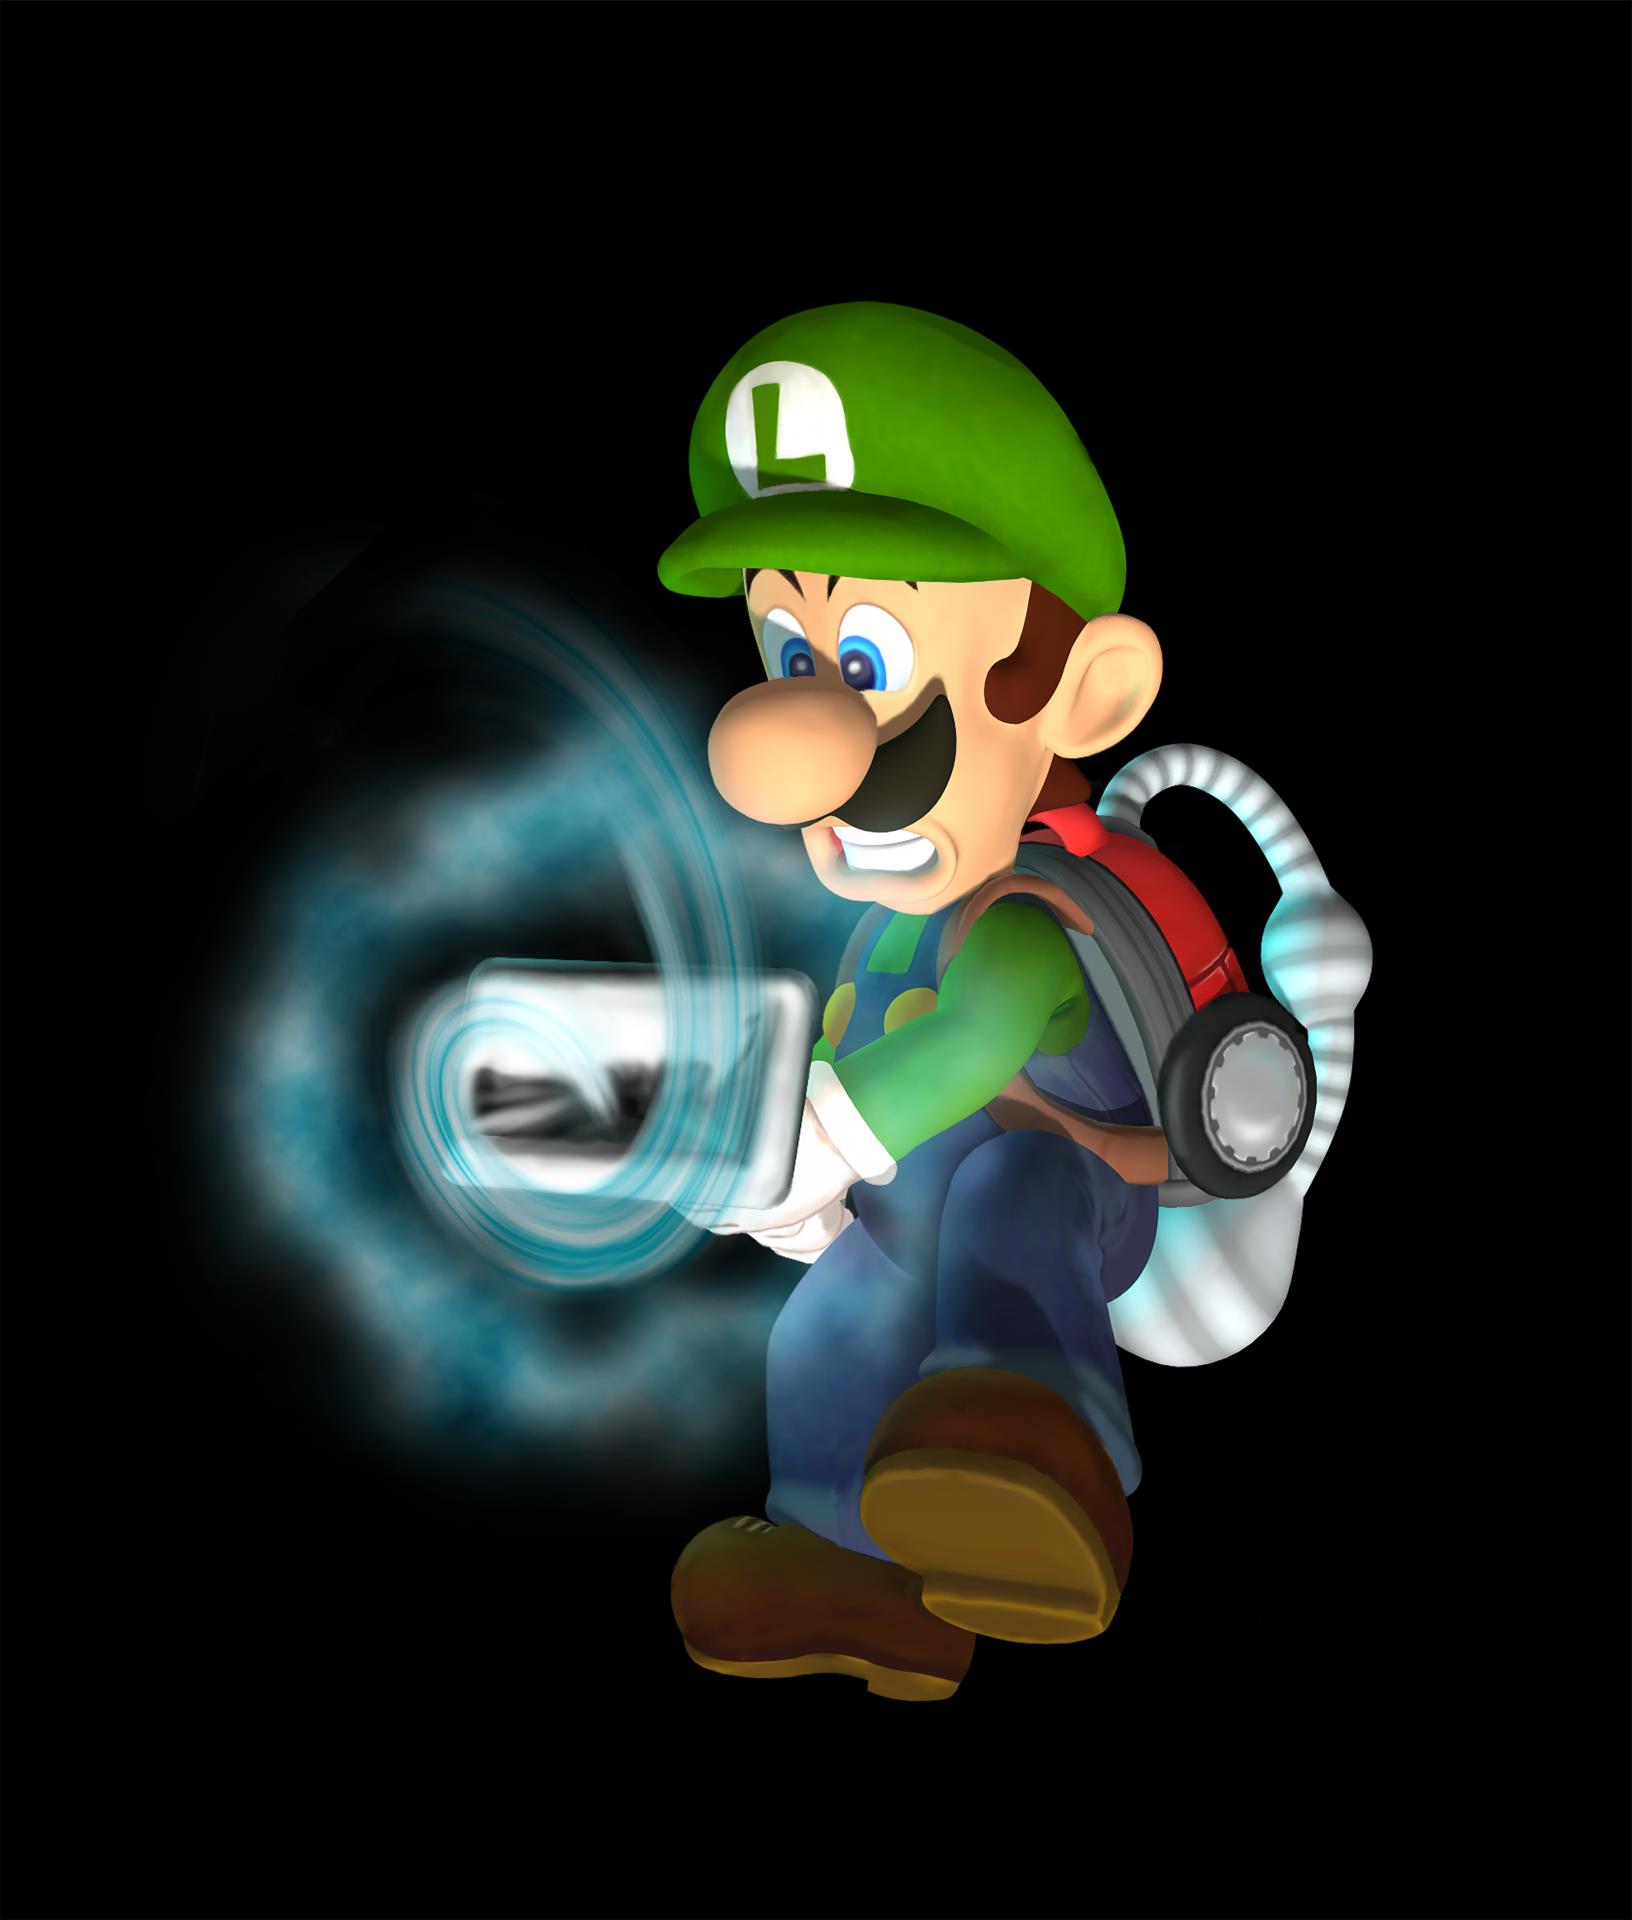 Luigi's Mansion art - Nintendo Everything